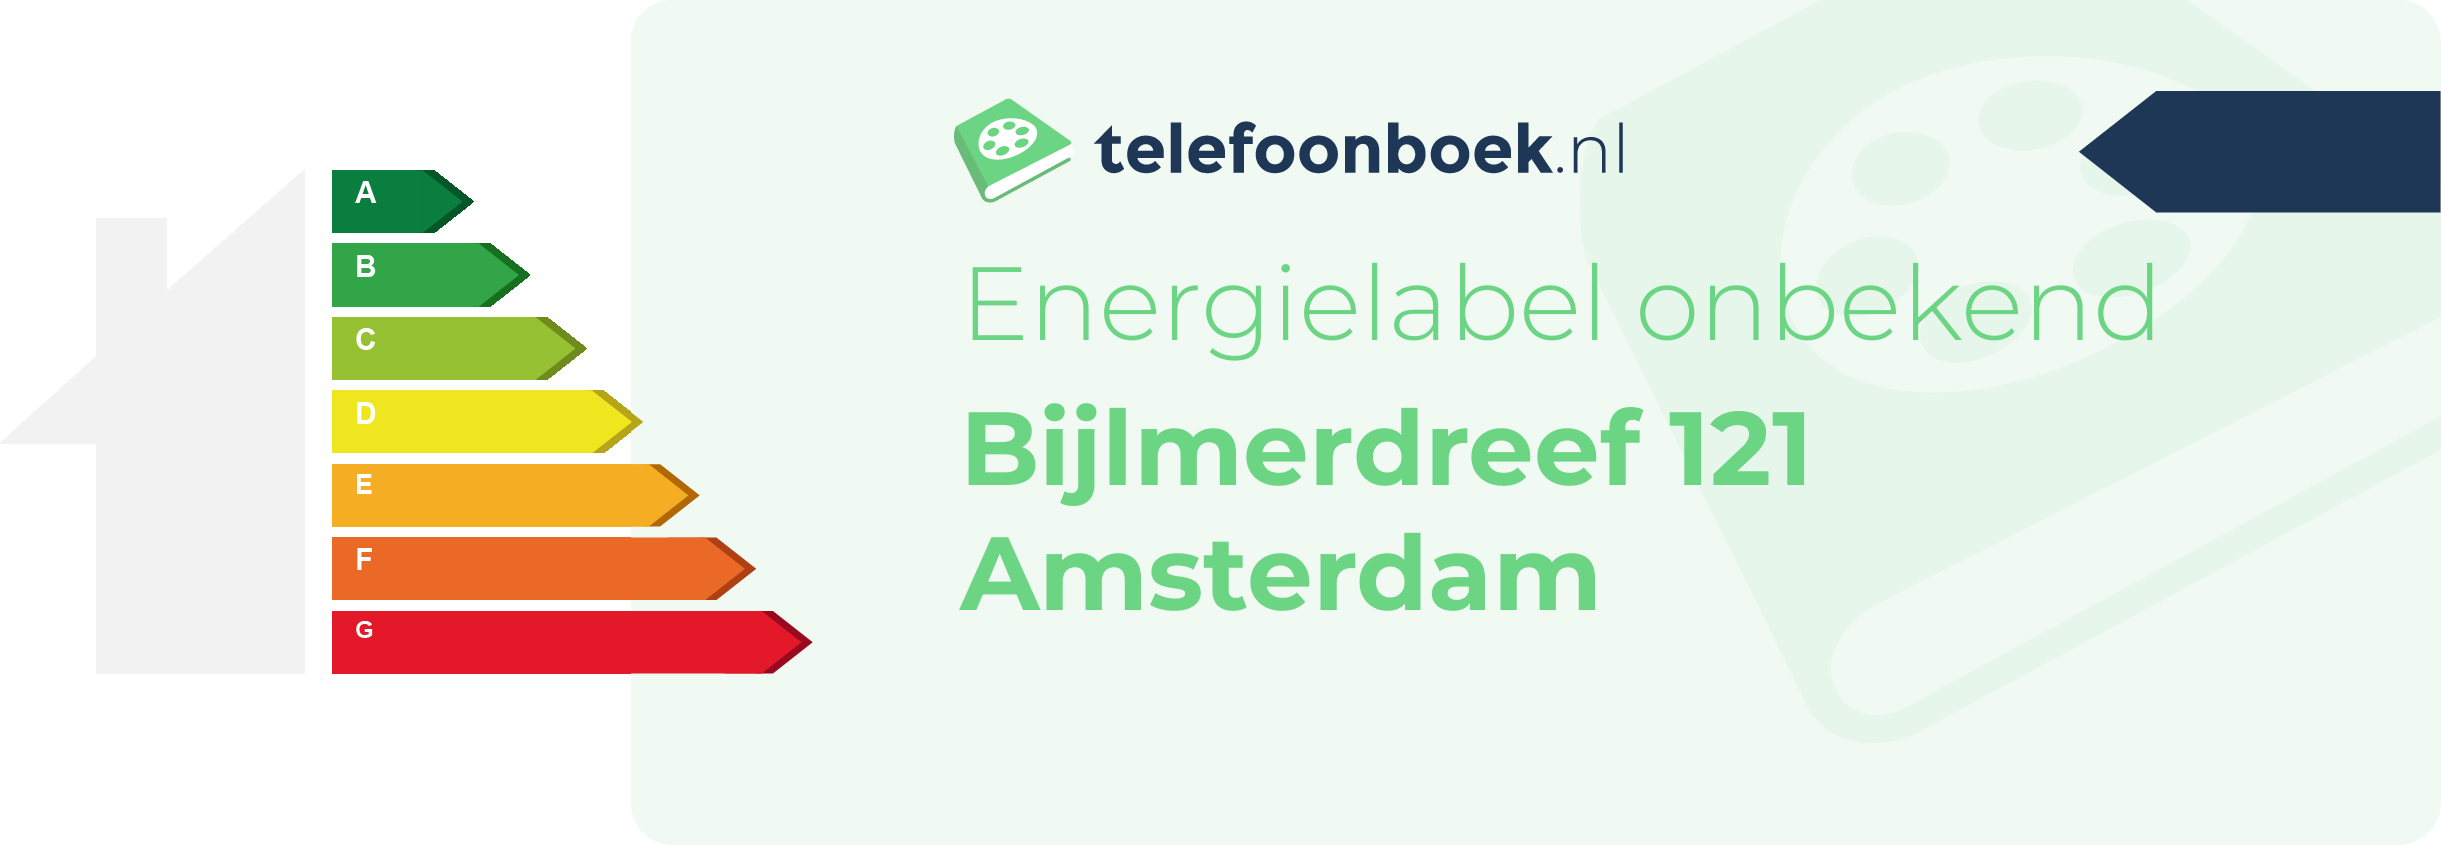 Energielabel Bijlmerdreef 121 Amsterdam